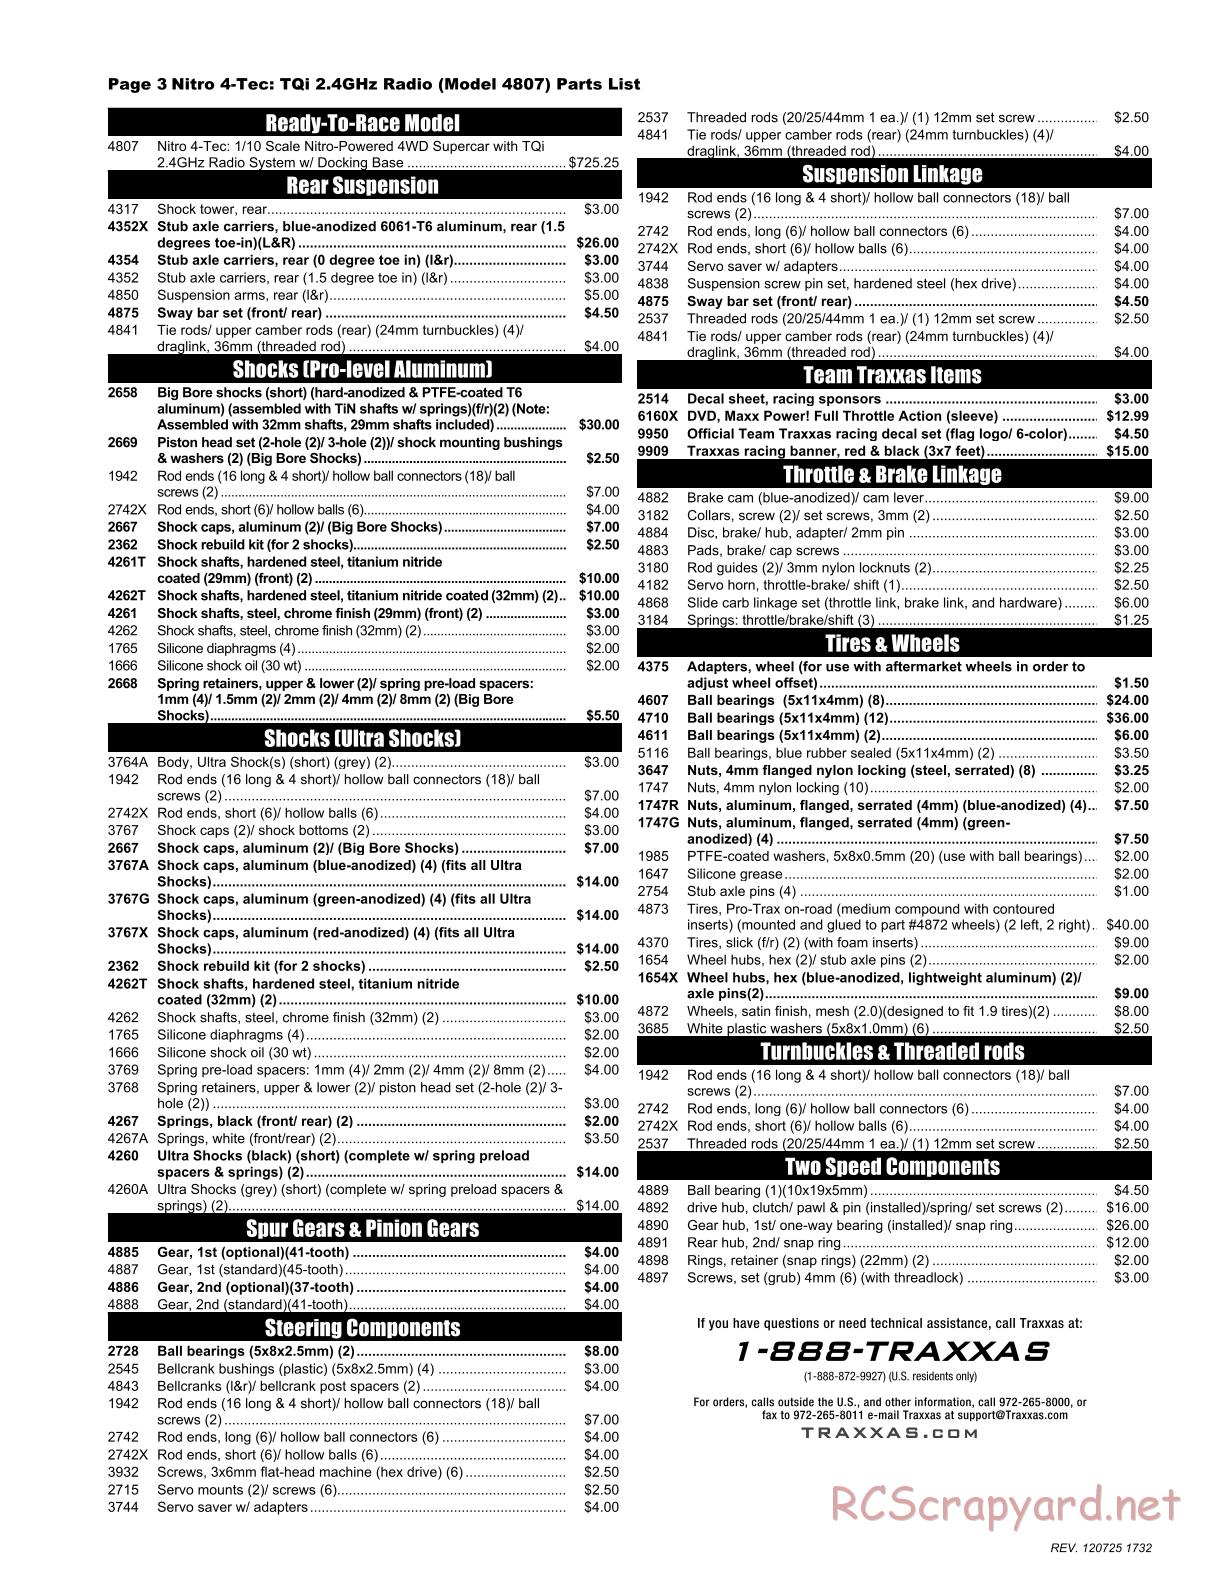 Traxxas - Nitro 4-Tec 3.3 (2010) - Parts List - Page 3